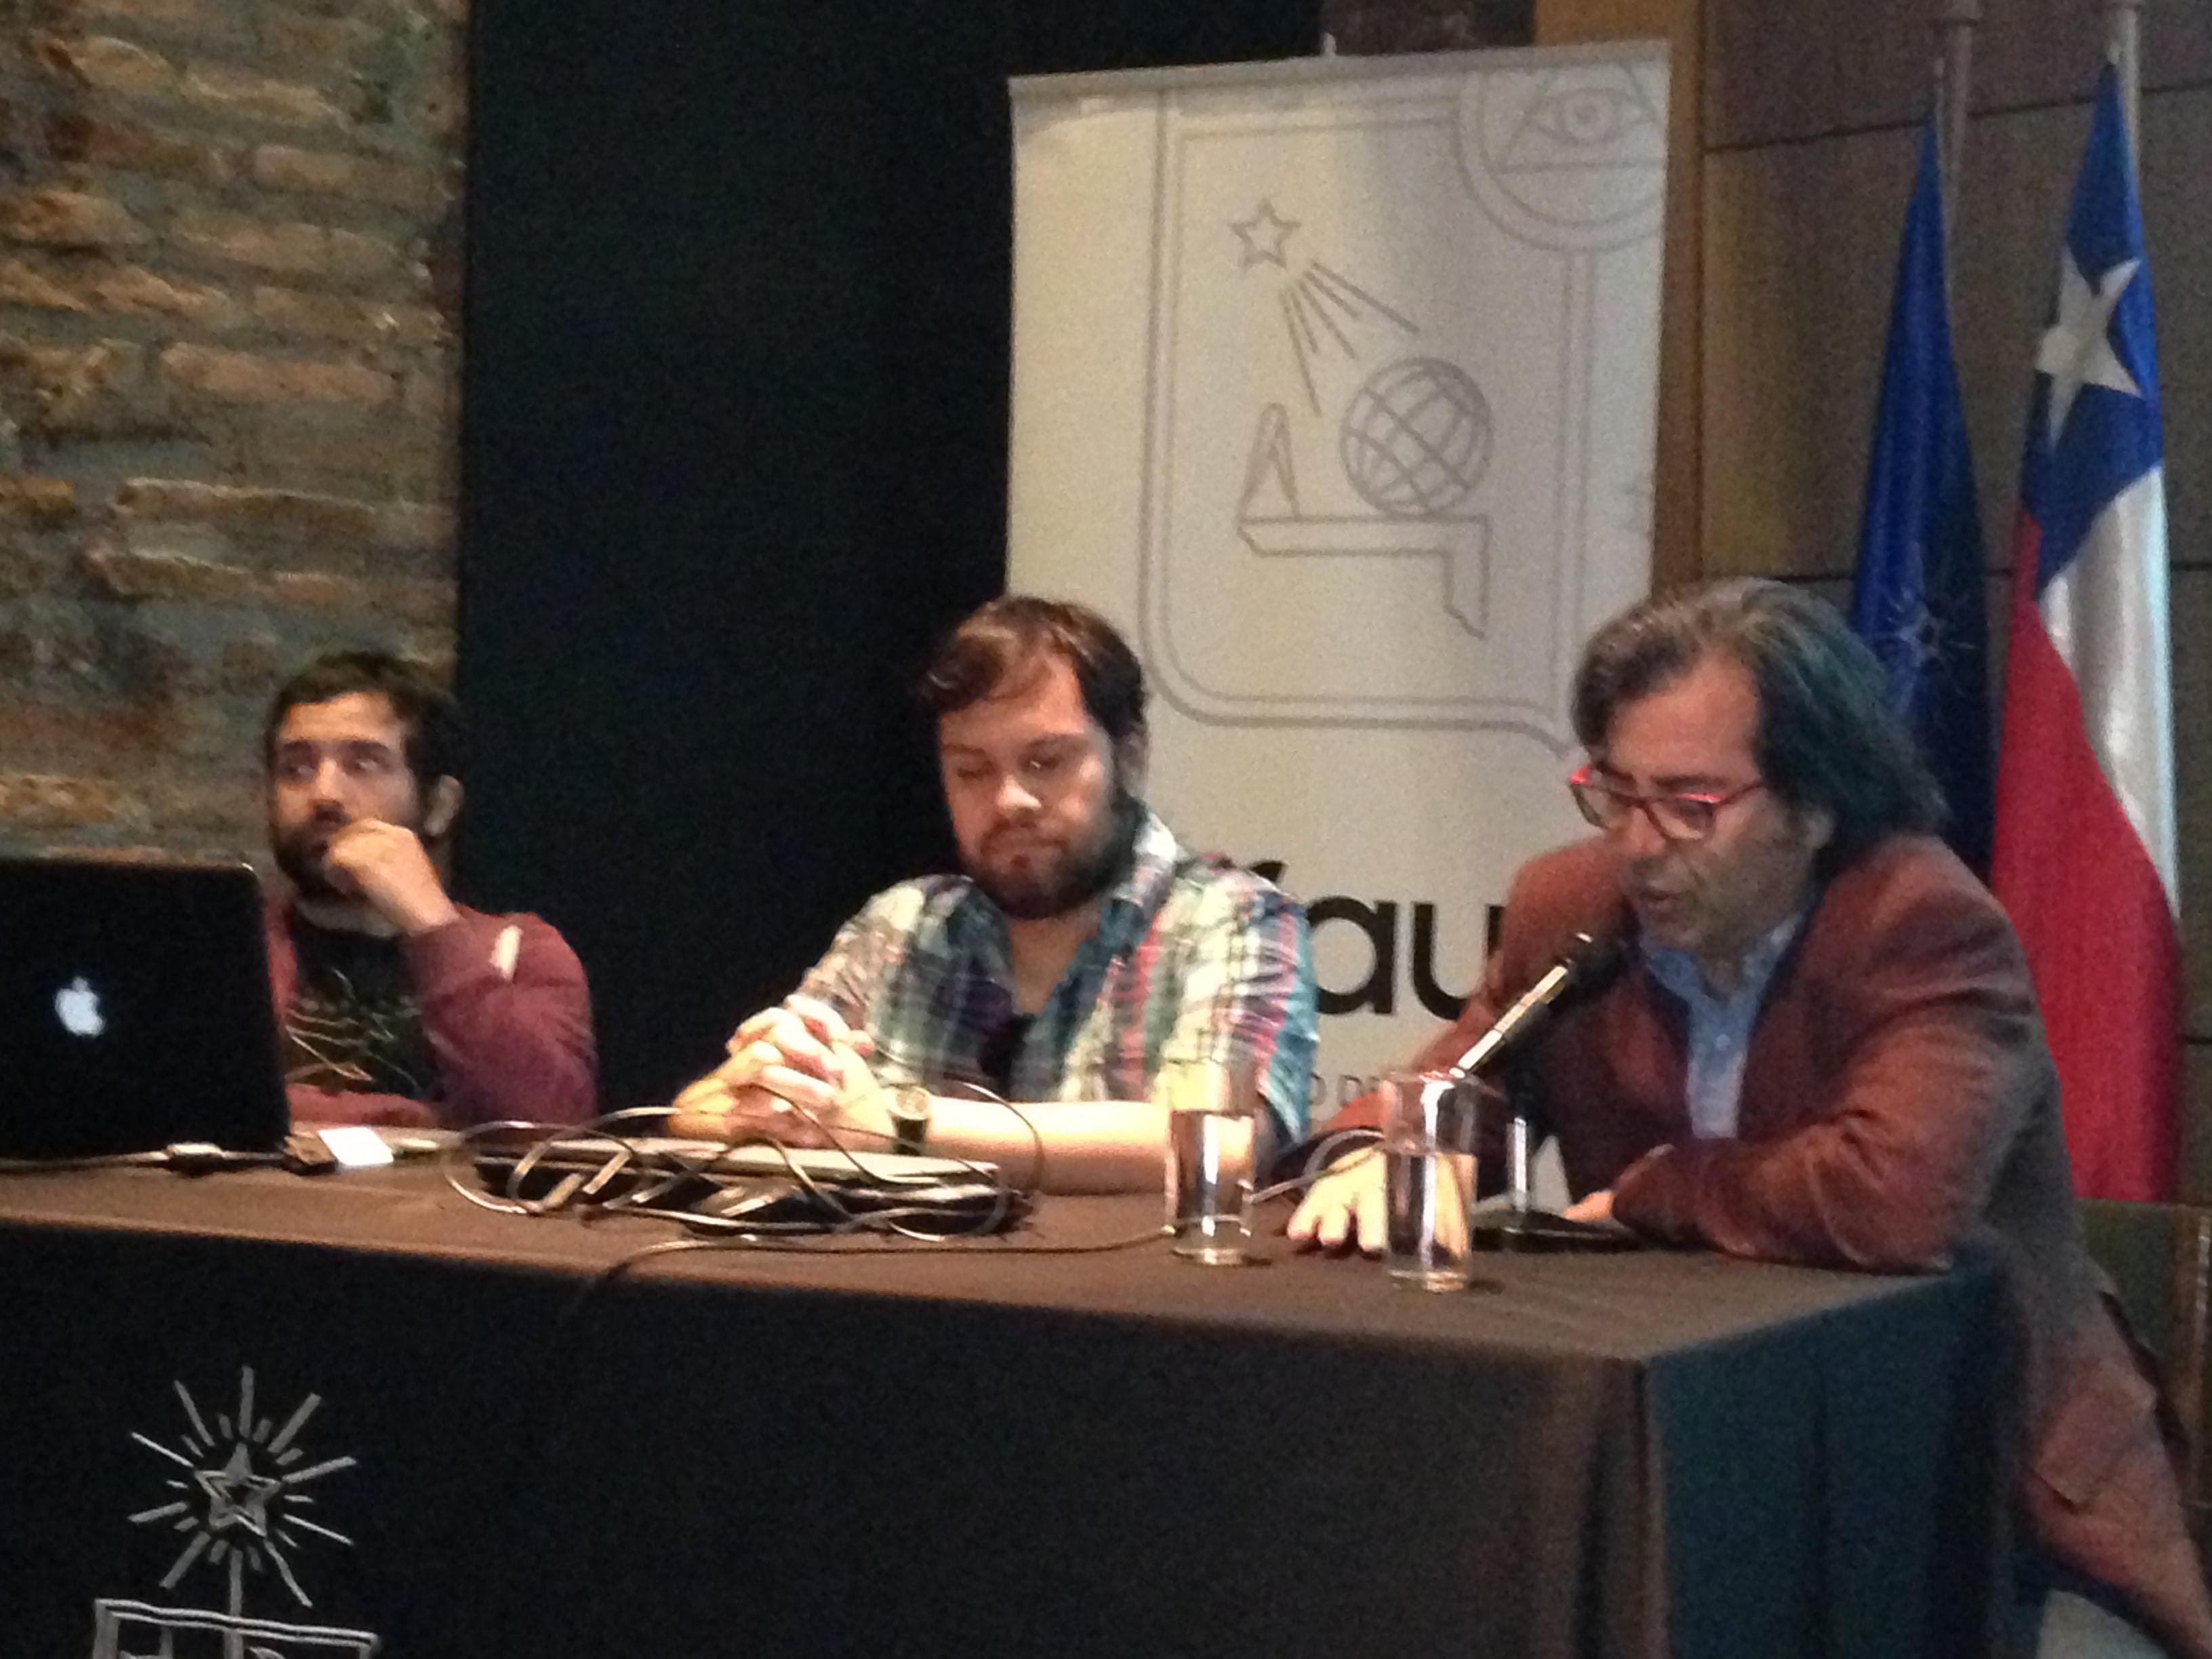 De izquierda a derecha: Eduardo Leblanc, Rodrigo Vera y Mauricio Vico.